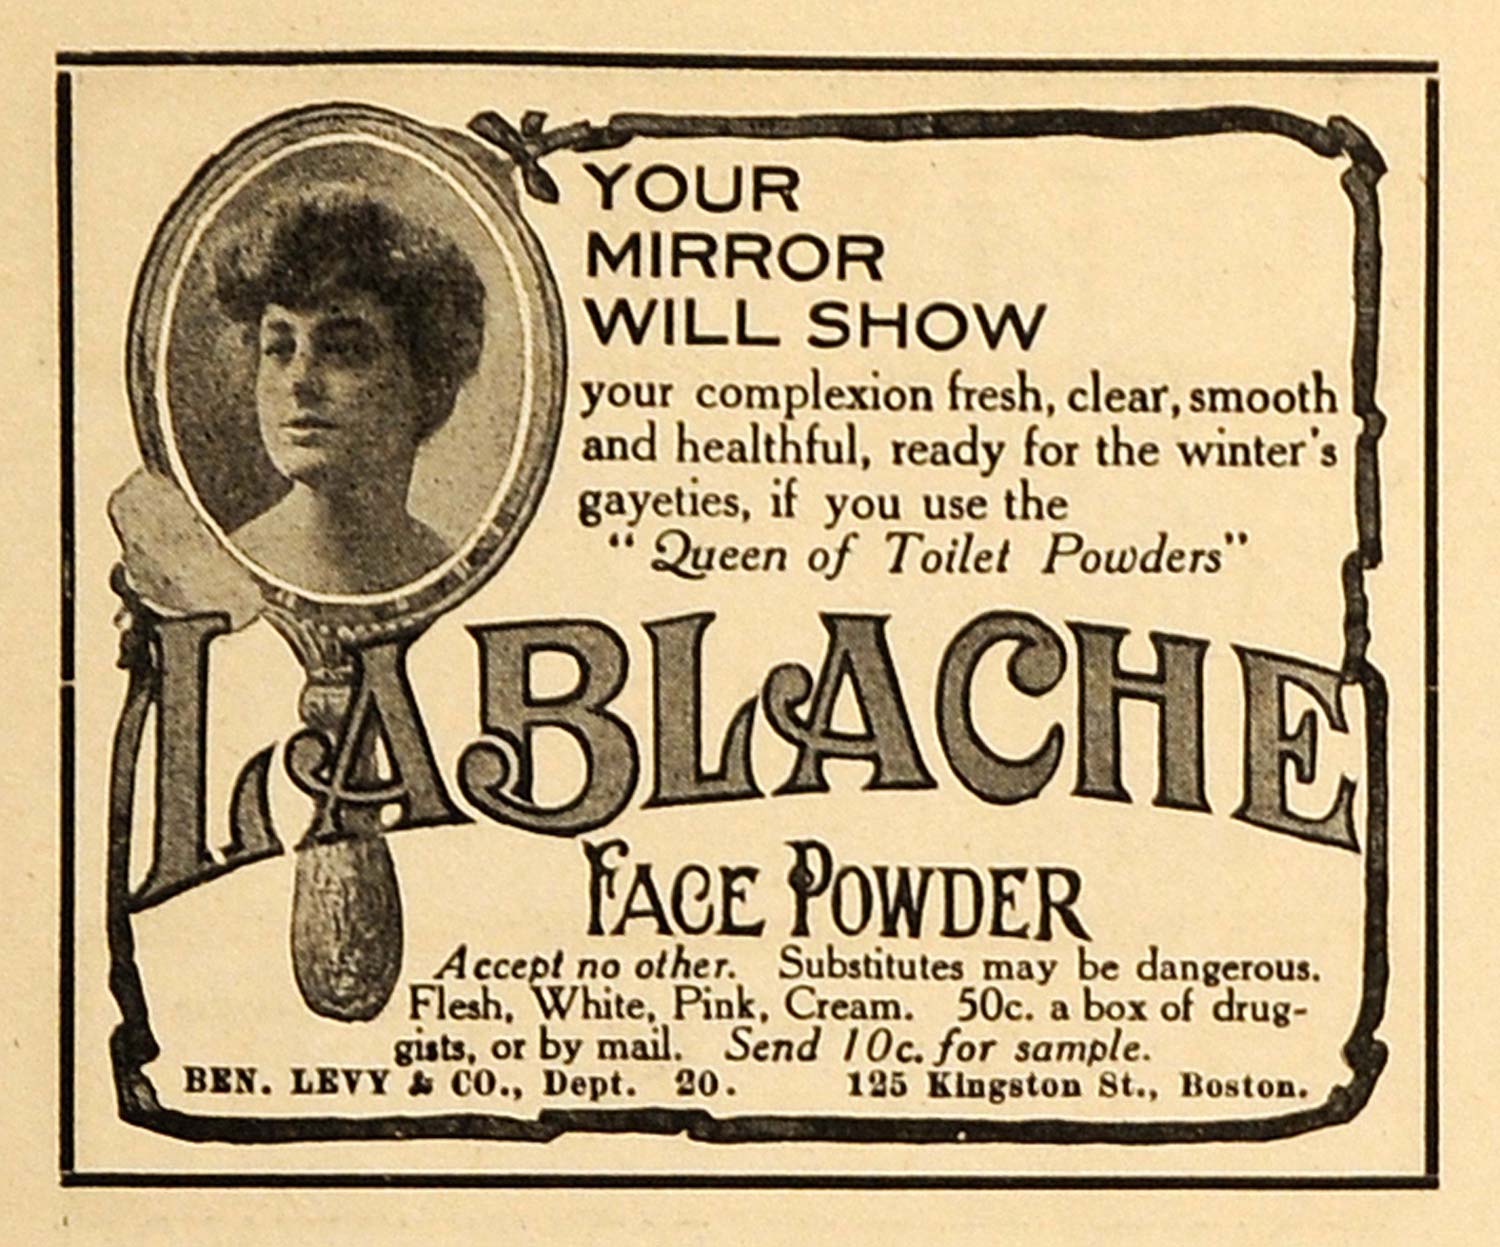 1906 Ad Lablache Toilet Face Powder Ben Levy & Company - ORIGINAL MUS1